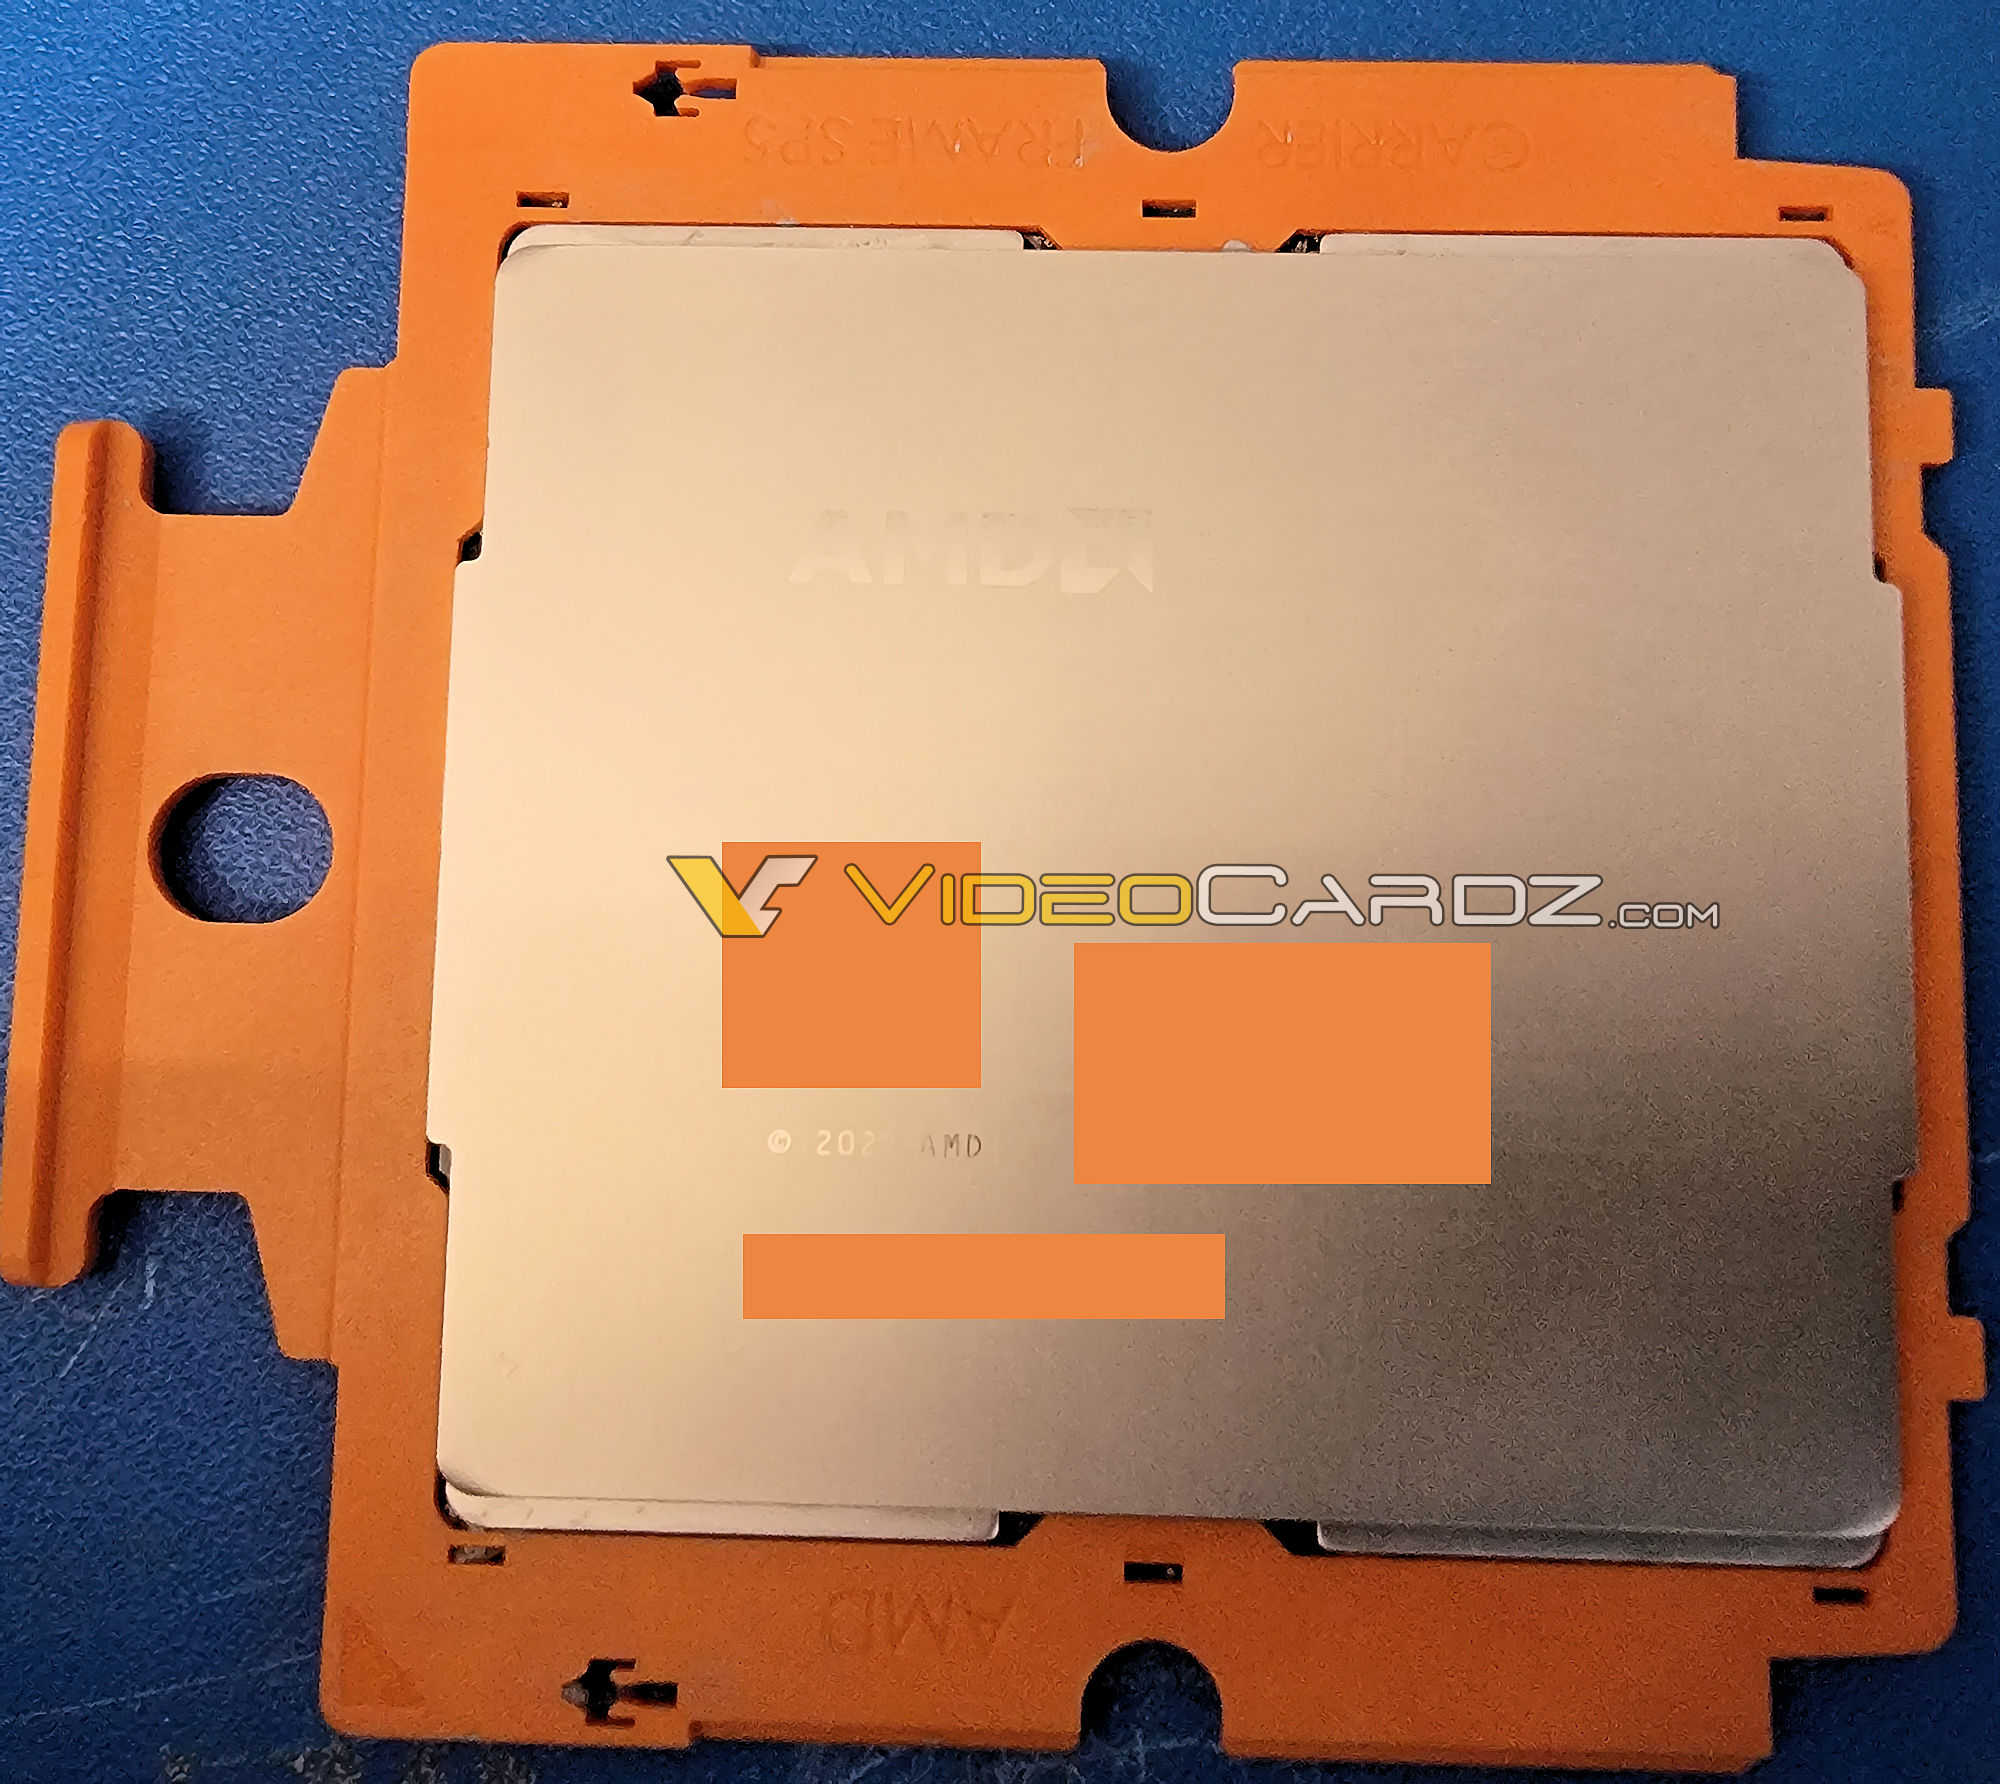 amd epyc genoa zen4 front หลุดภาพซีพียู AMD EPYC รุ่นใหญ่สถาปัตย์ ZEN4 ขนาด 5nm รหัส “Genoa” รุ่นใหม่ล่าสุดรองรับแรม DDR5 และ PCIe Gen5  